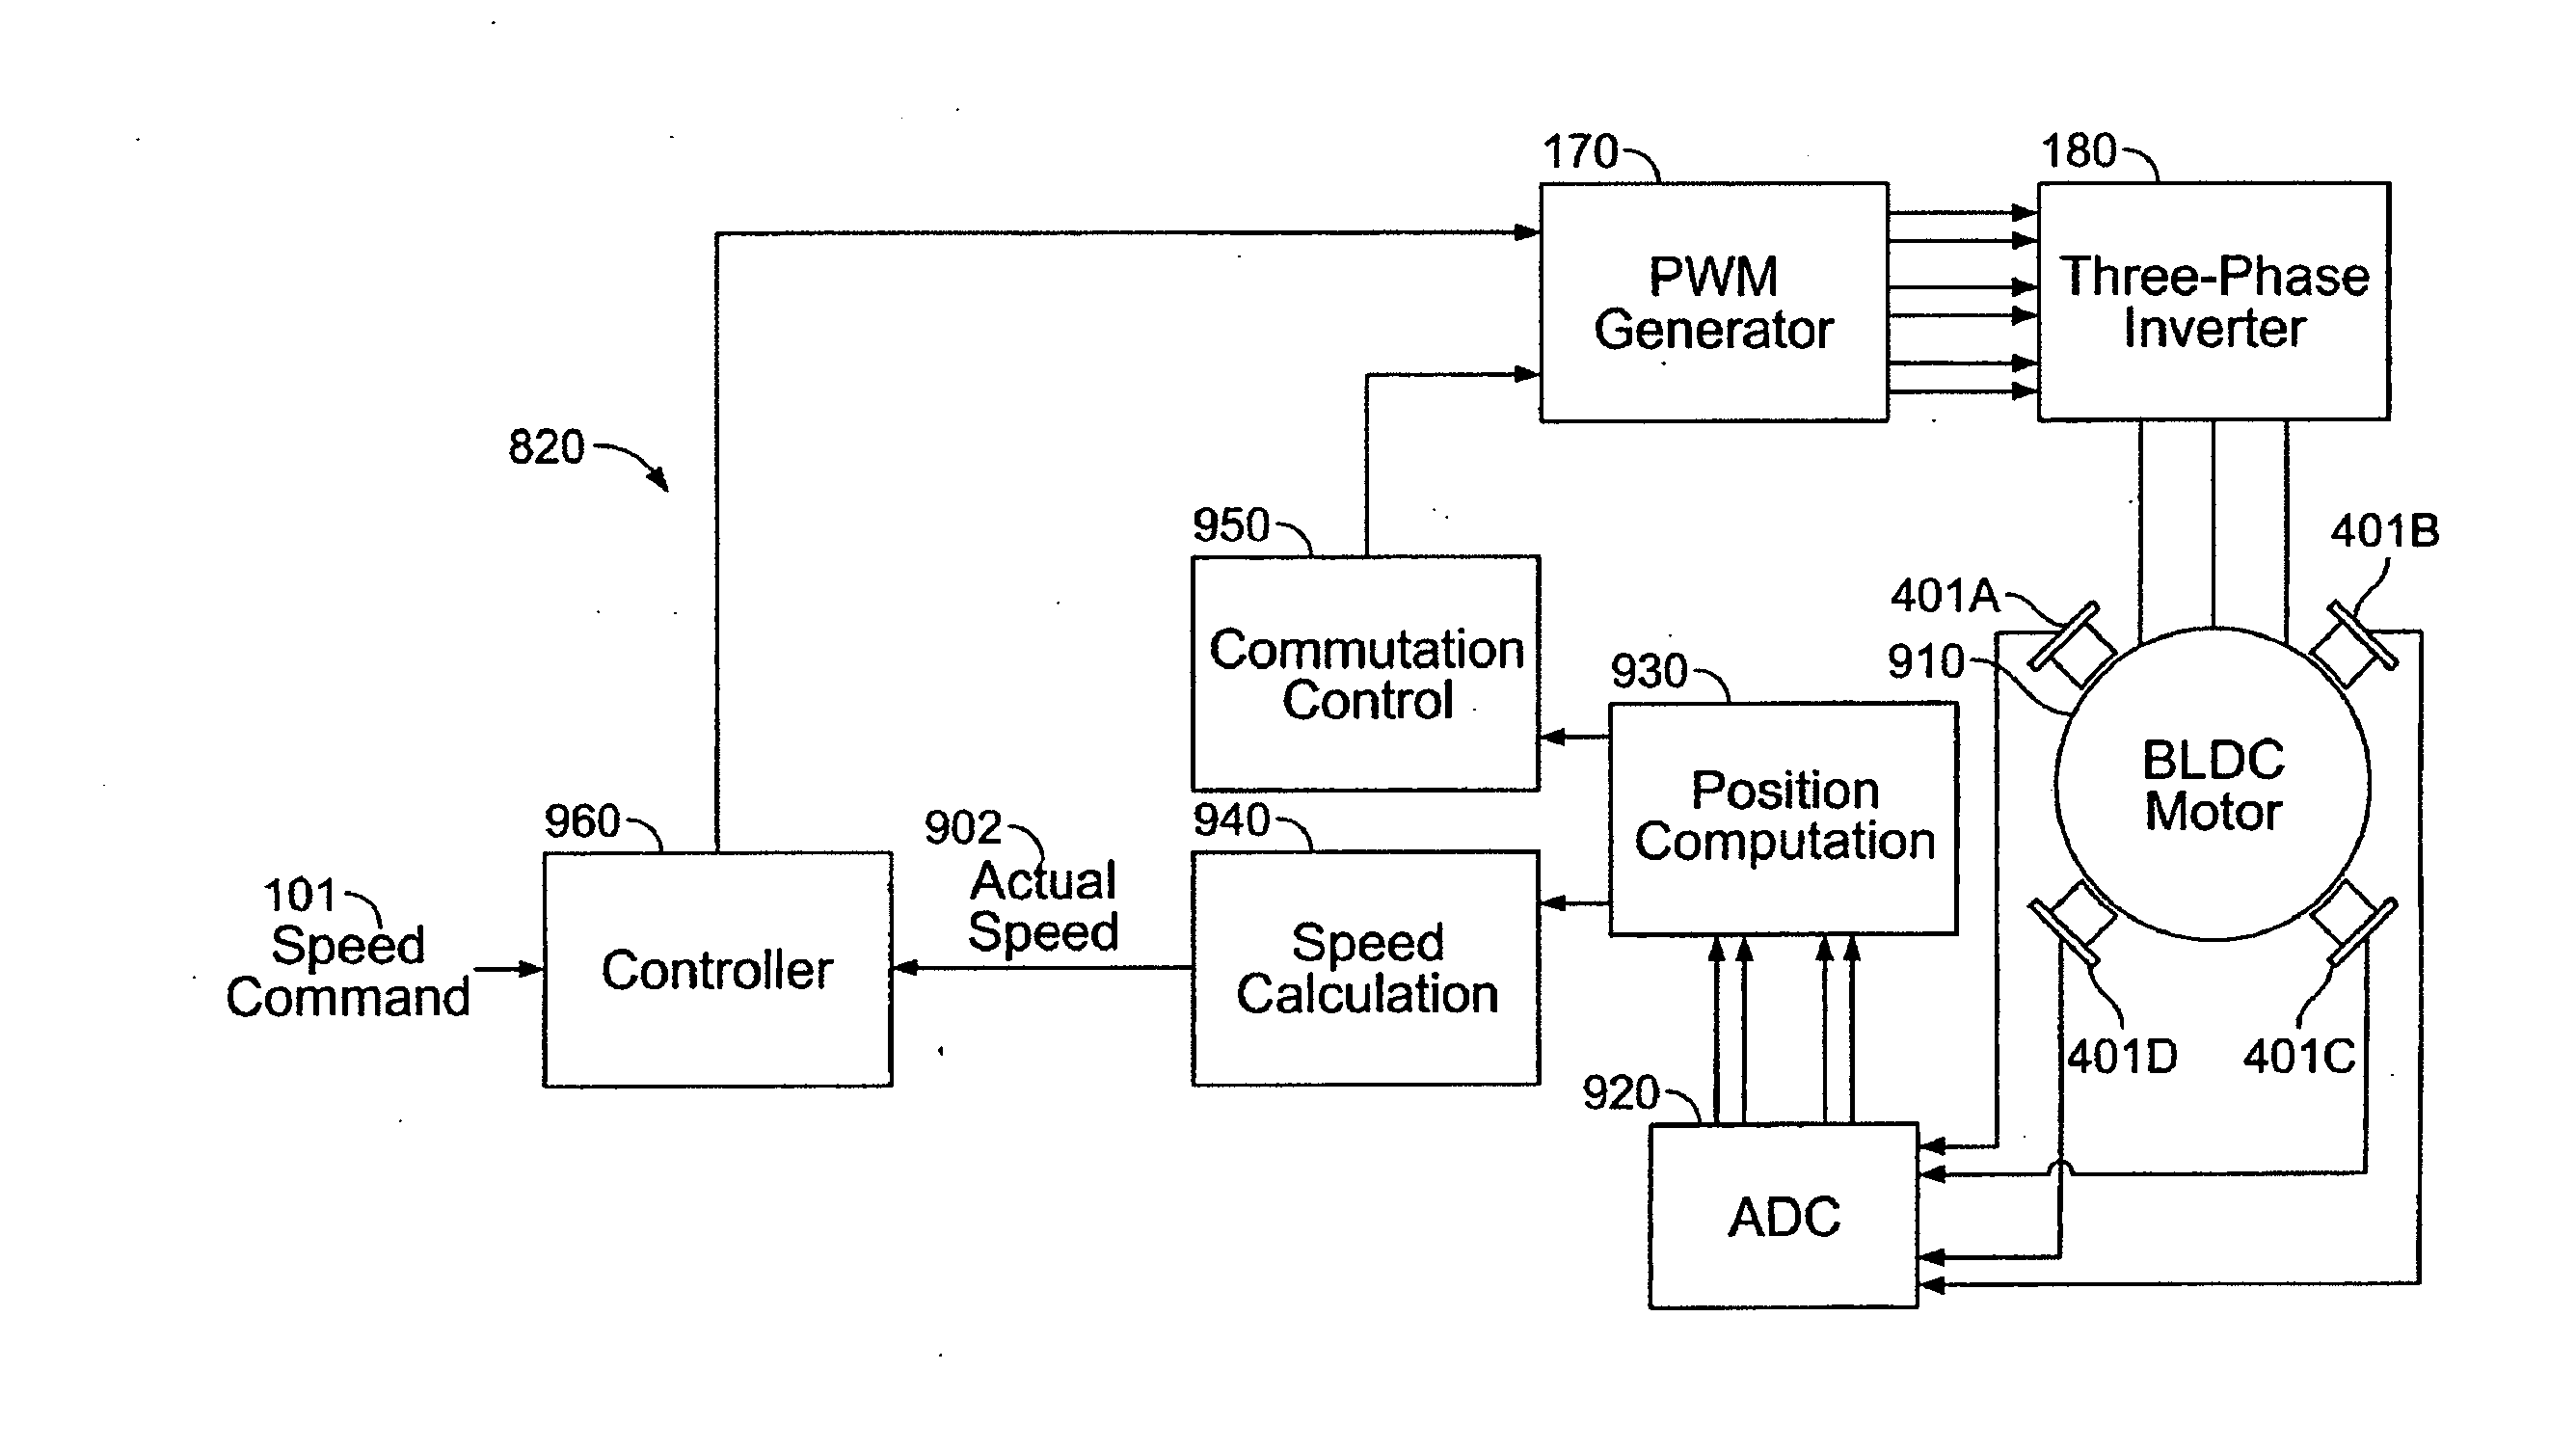 Compressor control system for a portable ventilator